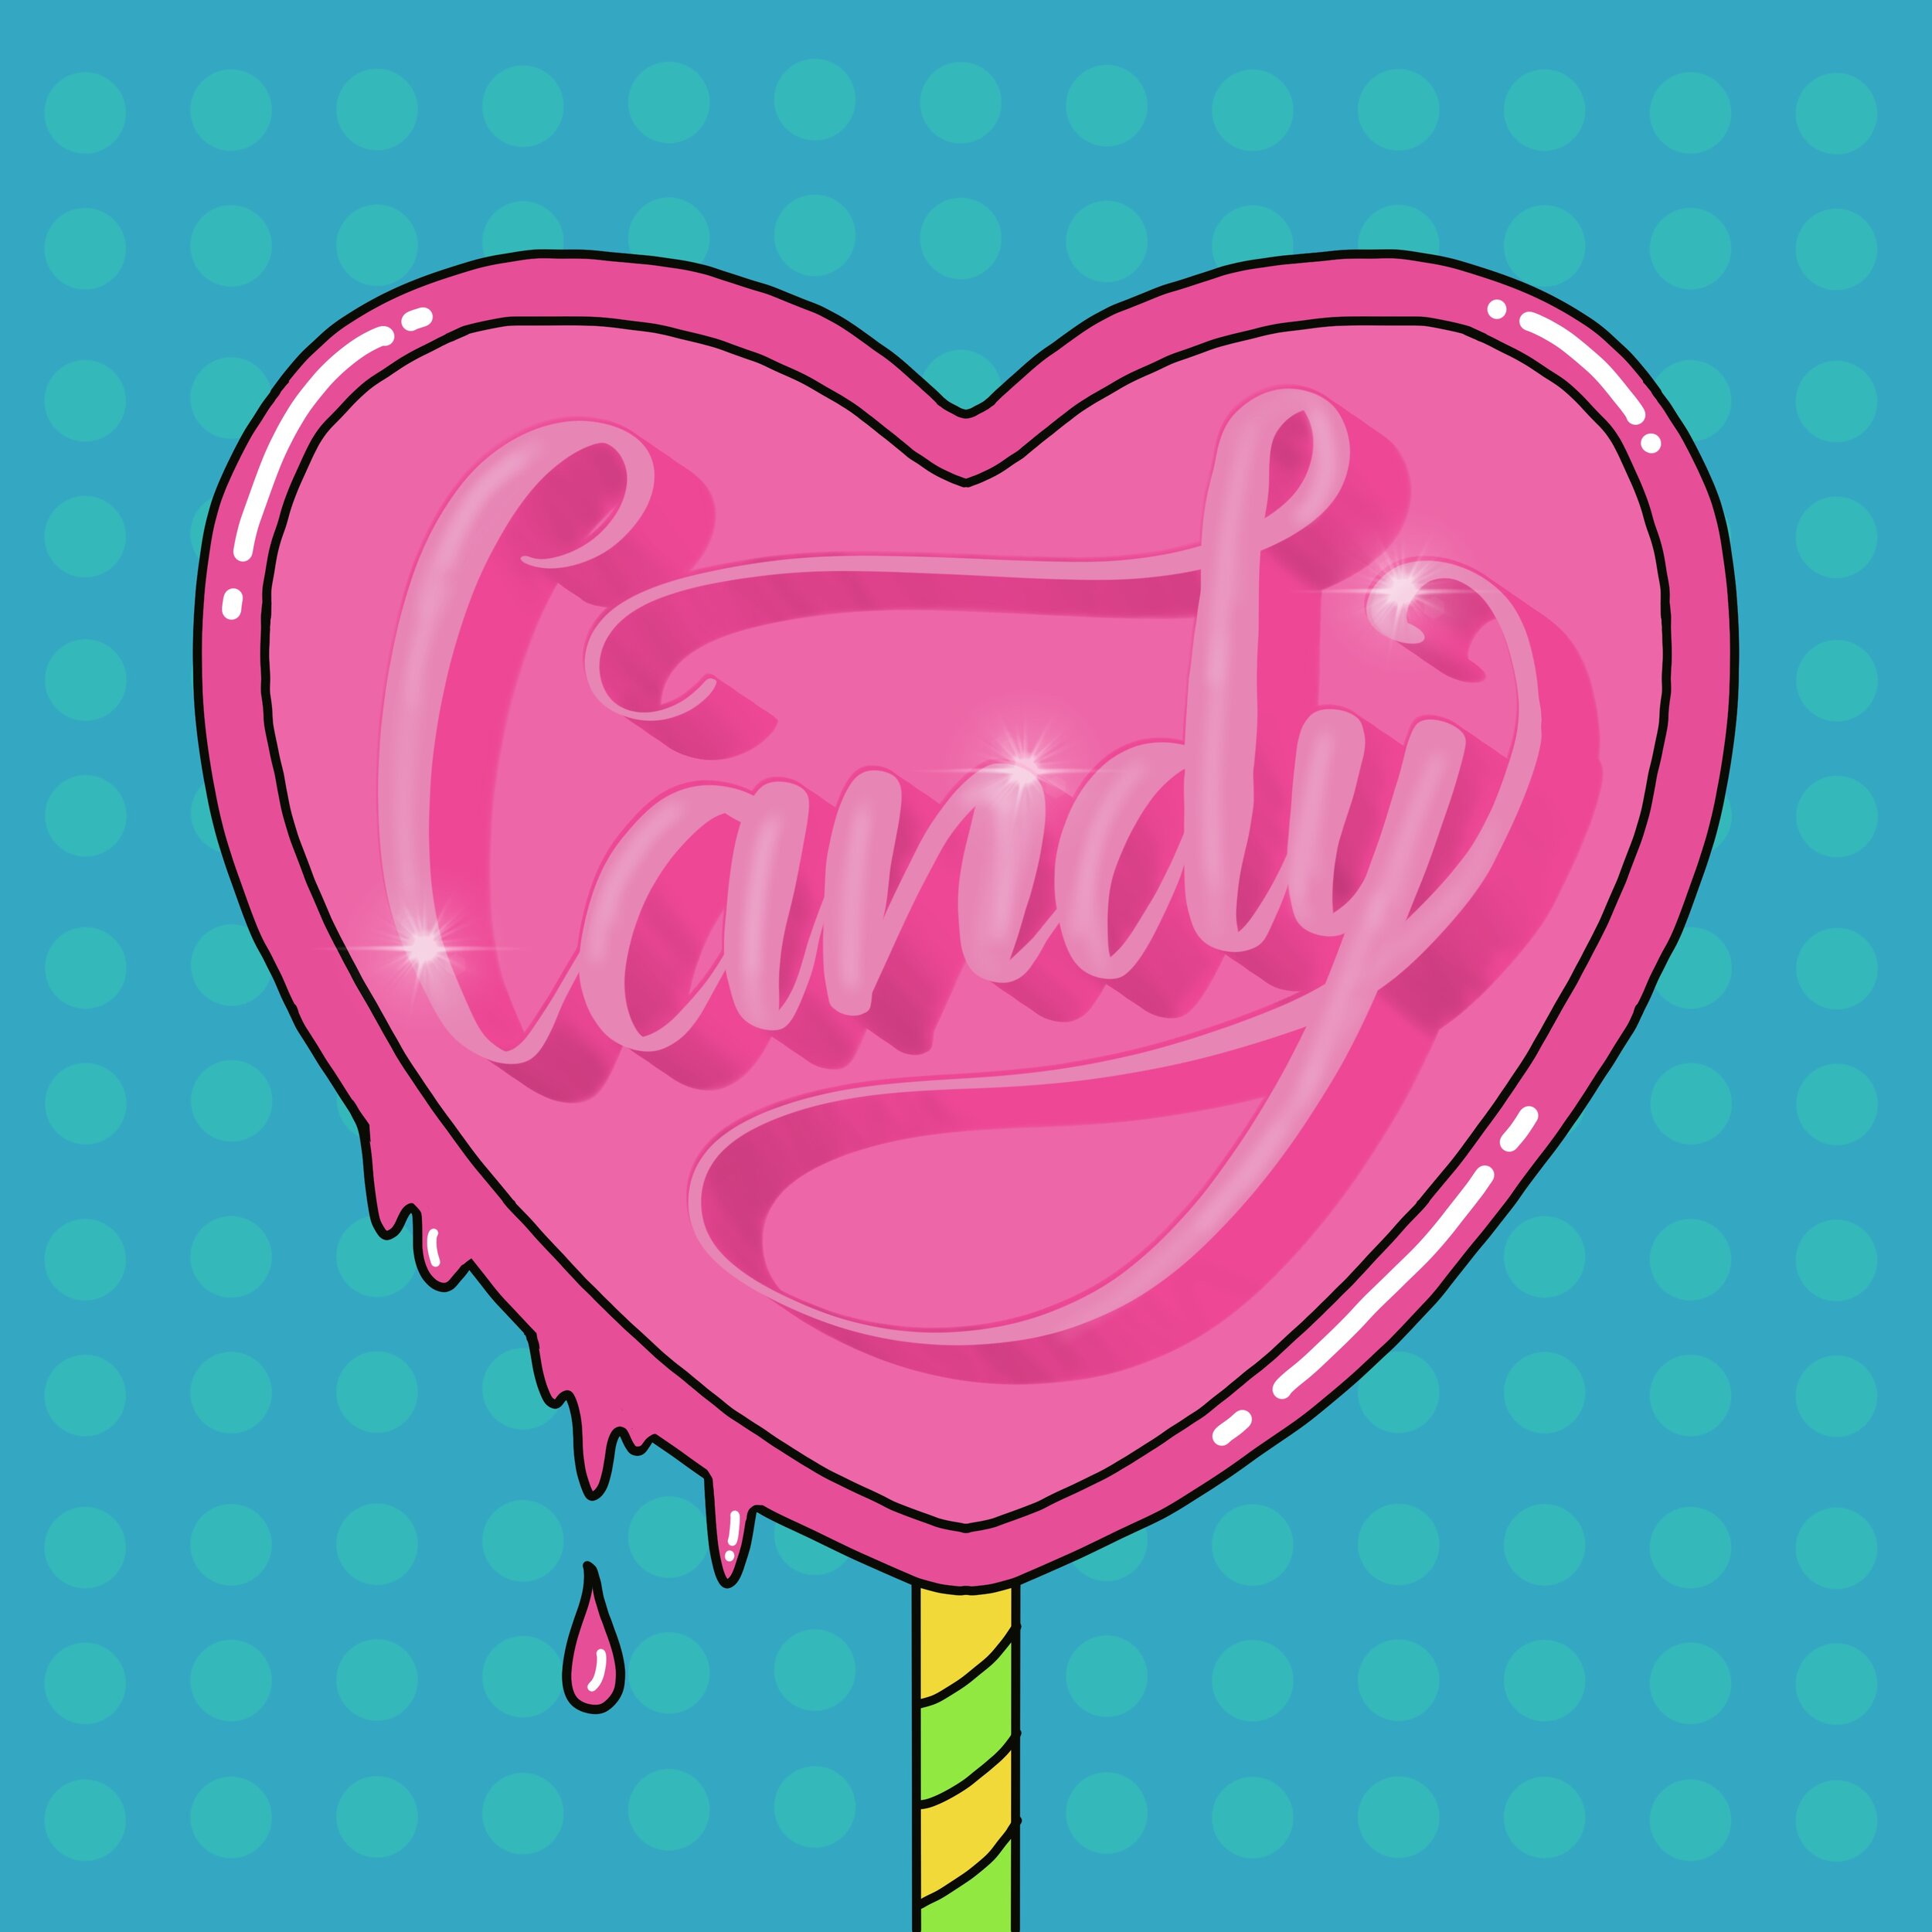 Candy.jpg